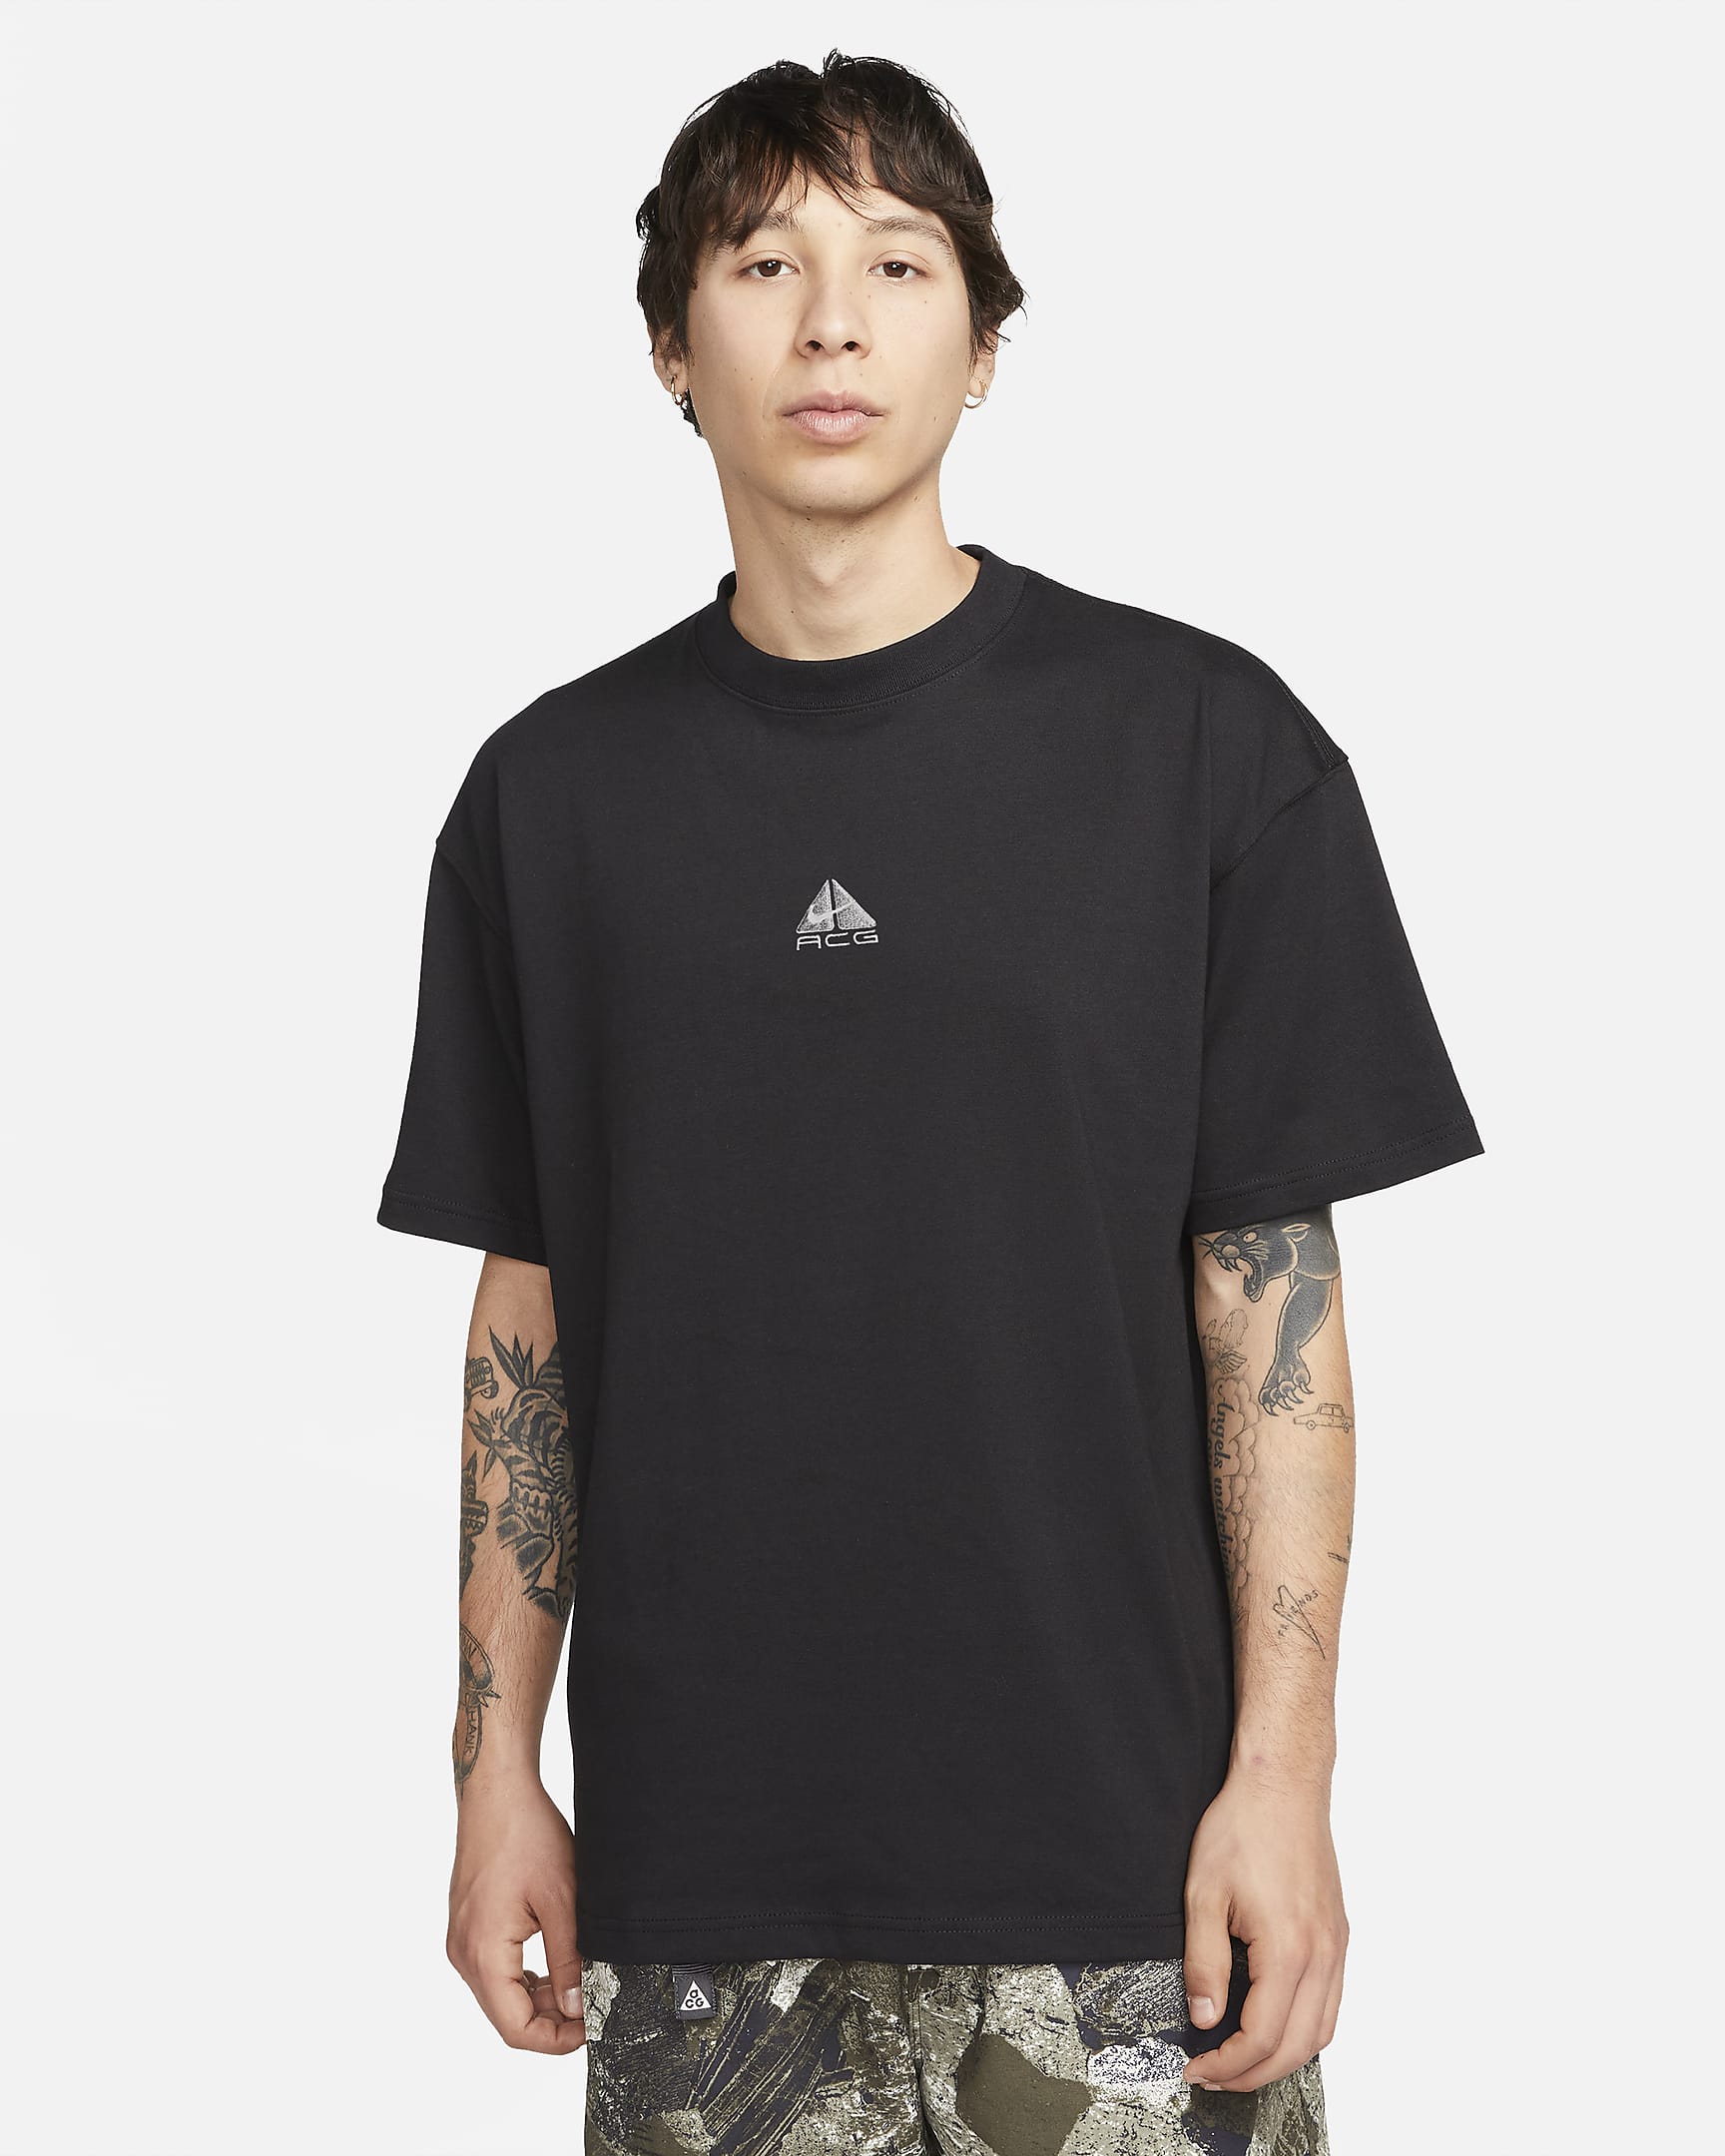 T-shirt Nike ACG - Uomo - Nero/Light Smoke Grey/Summit White